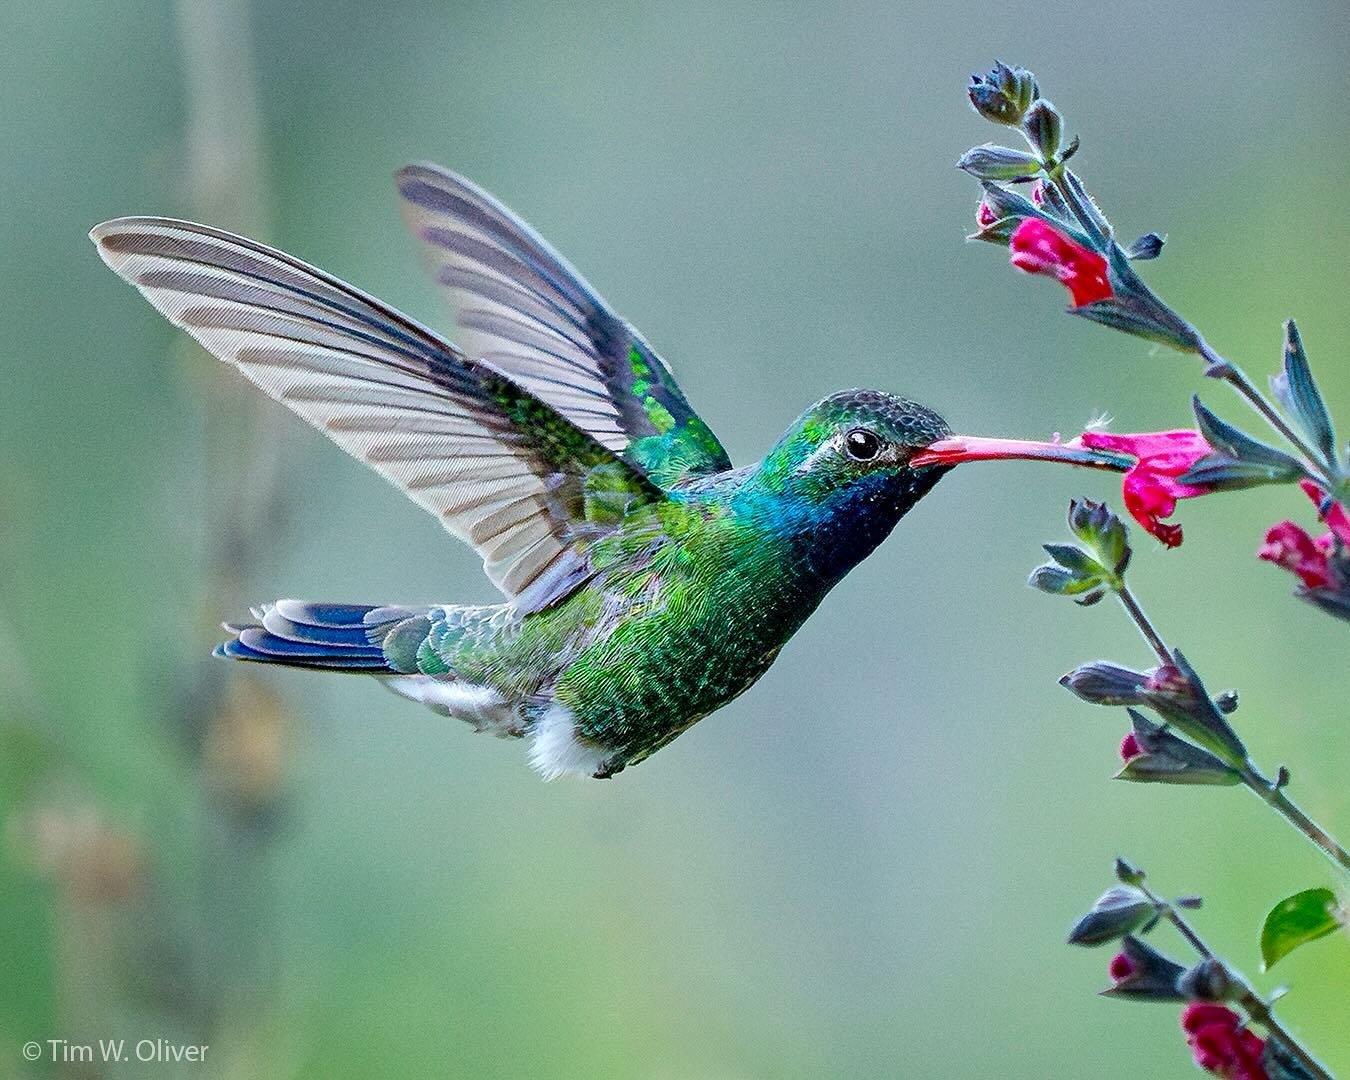 Broad-billed hummingbird feeding on sage flowers.  Captured with the OM System OM-1 and Olympus M.Zuiko ED 40-150mm f2.8 PRO lens with MC-14 teleconverter @ 150mm (full-frame equivalent = 300mm).
.
@omsystem.cameras
.
#hummingbird #hummingbirds #humm